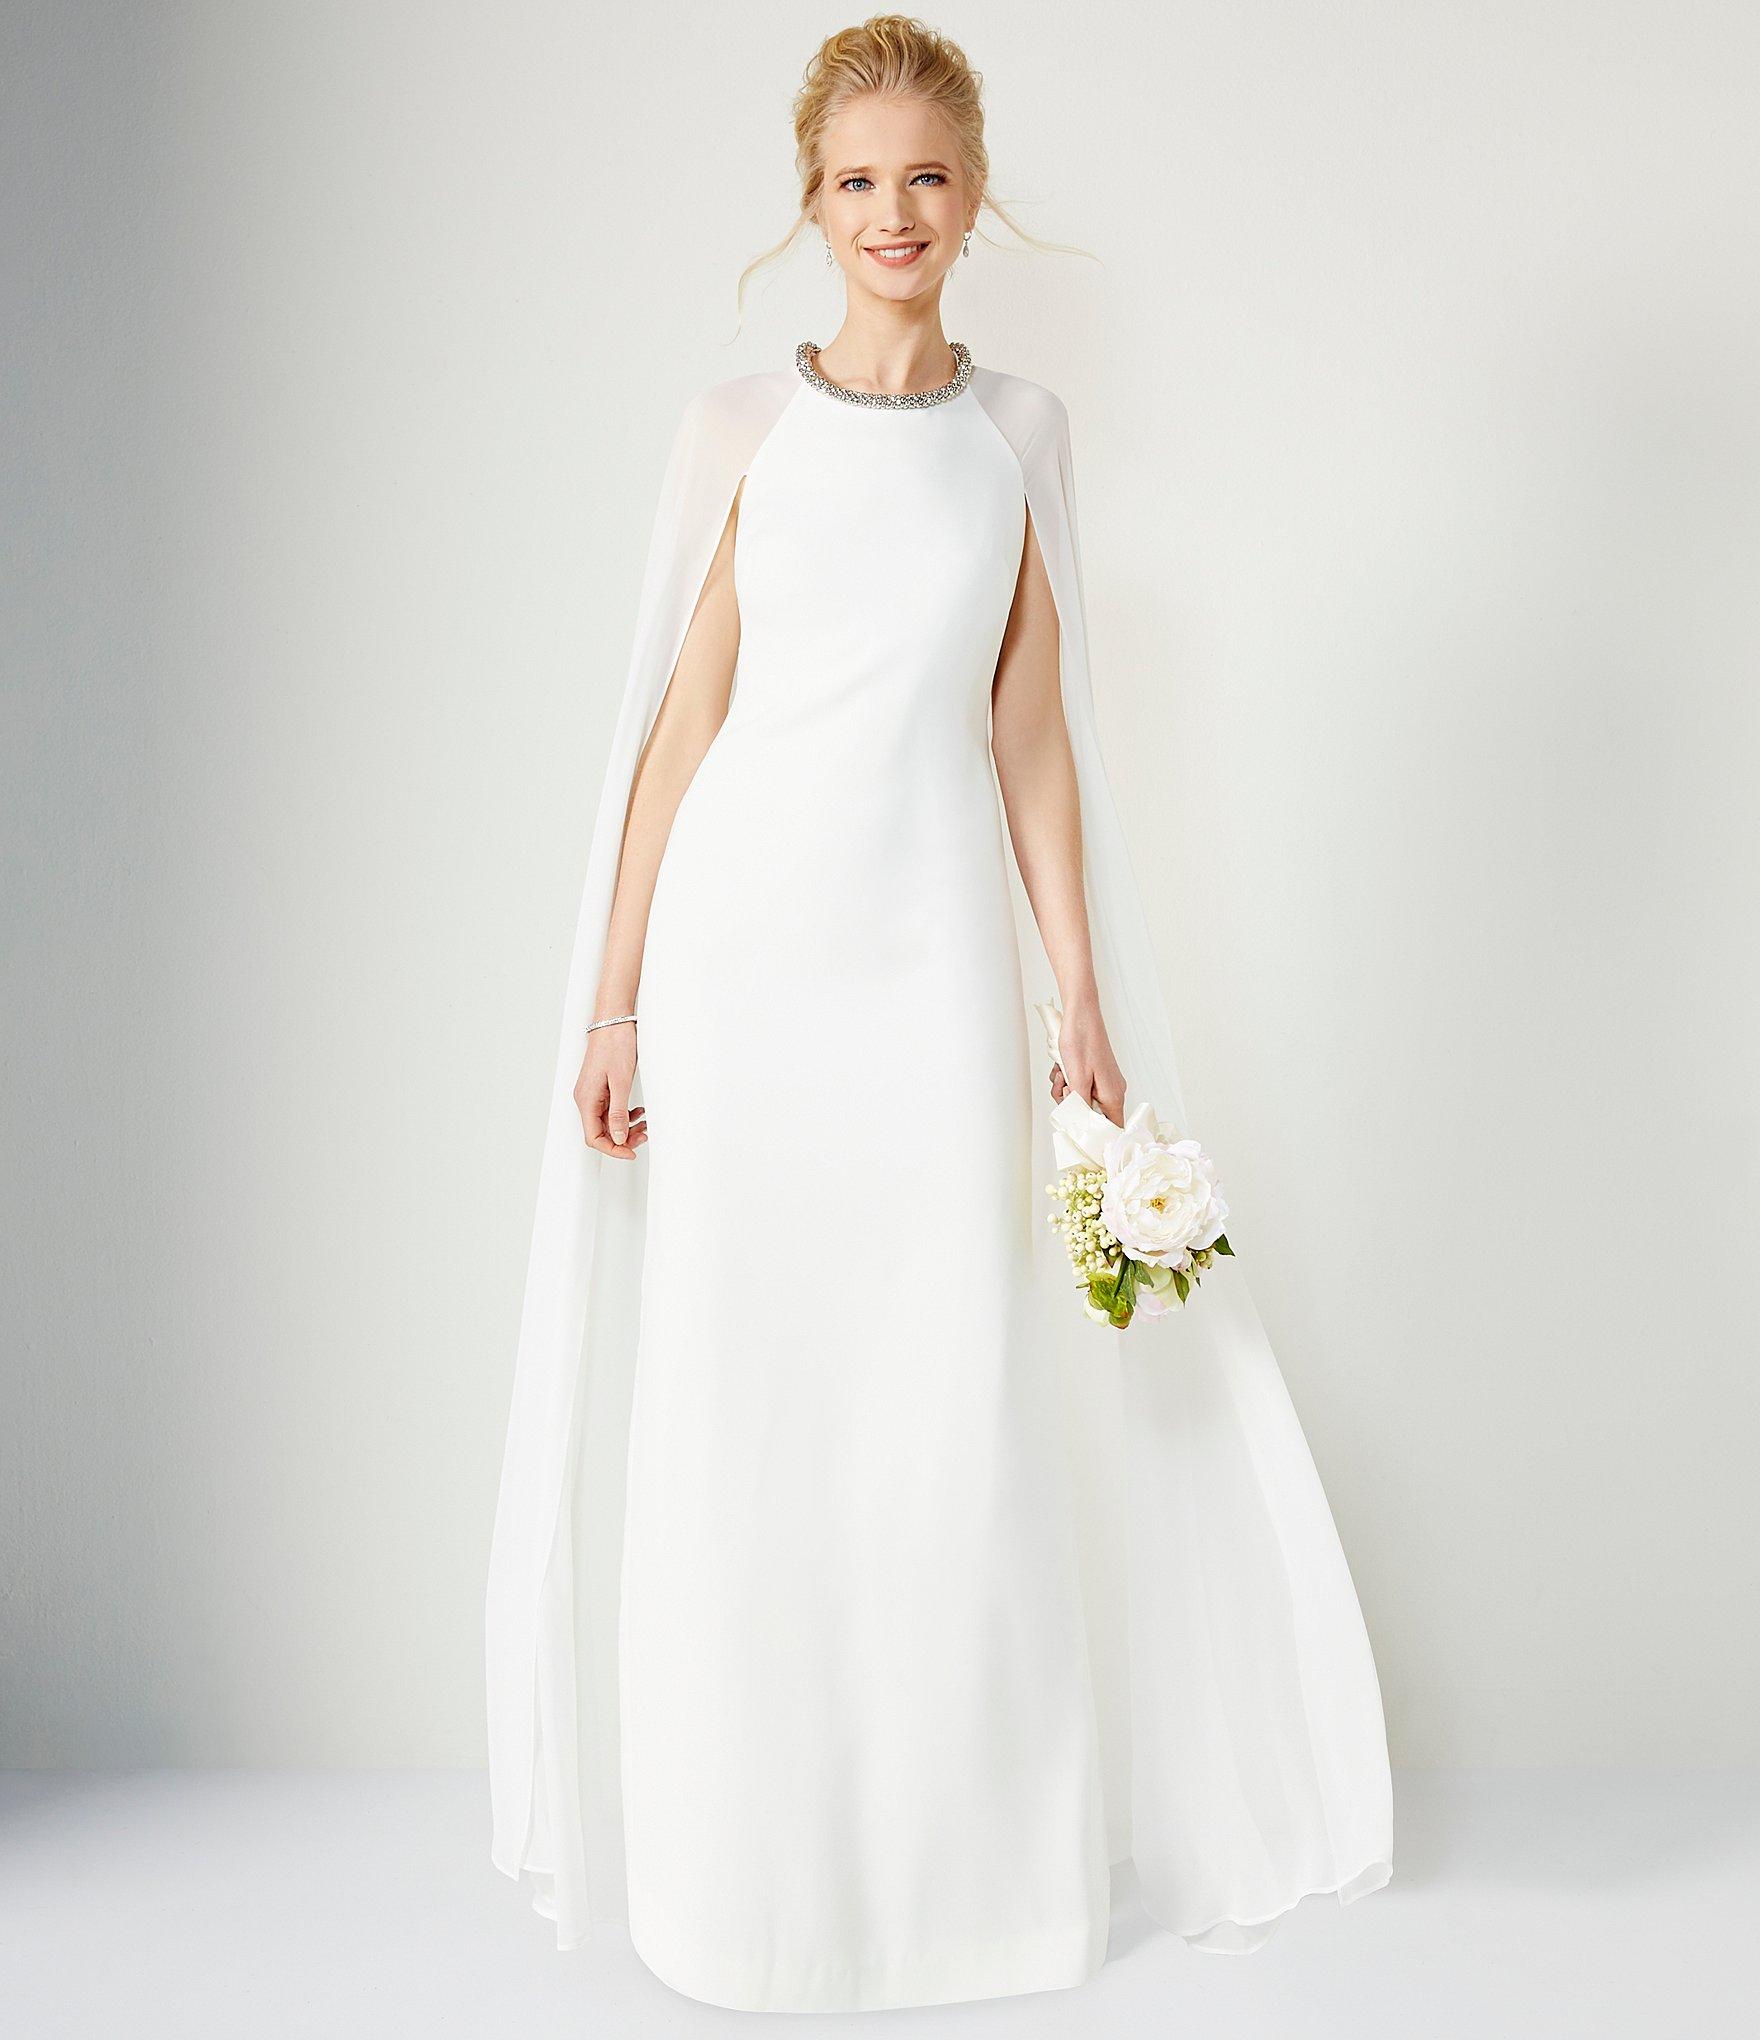 calvin klein long white dress